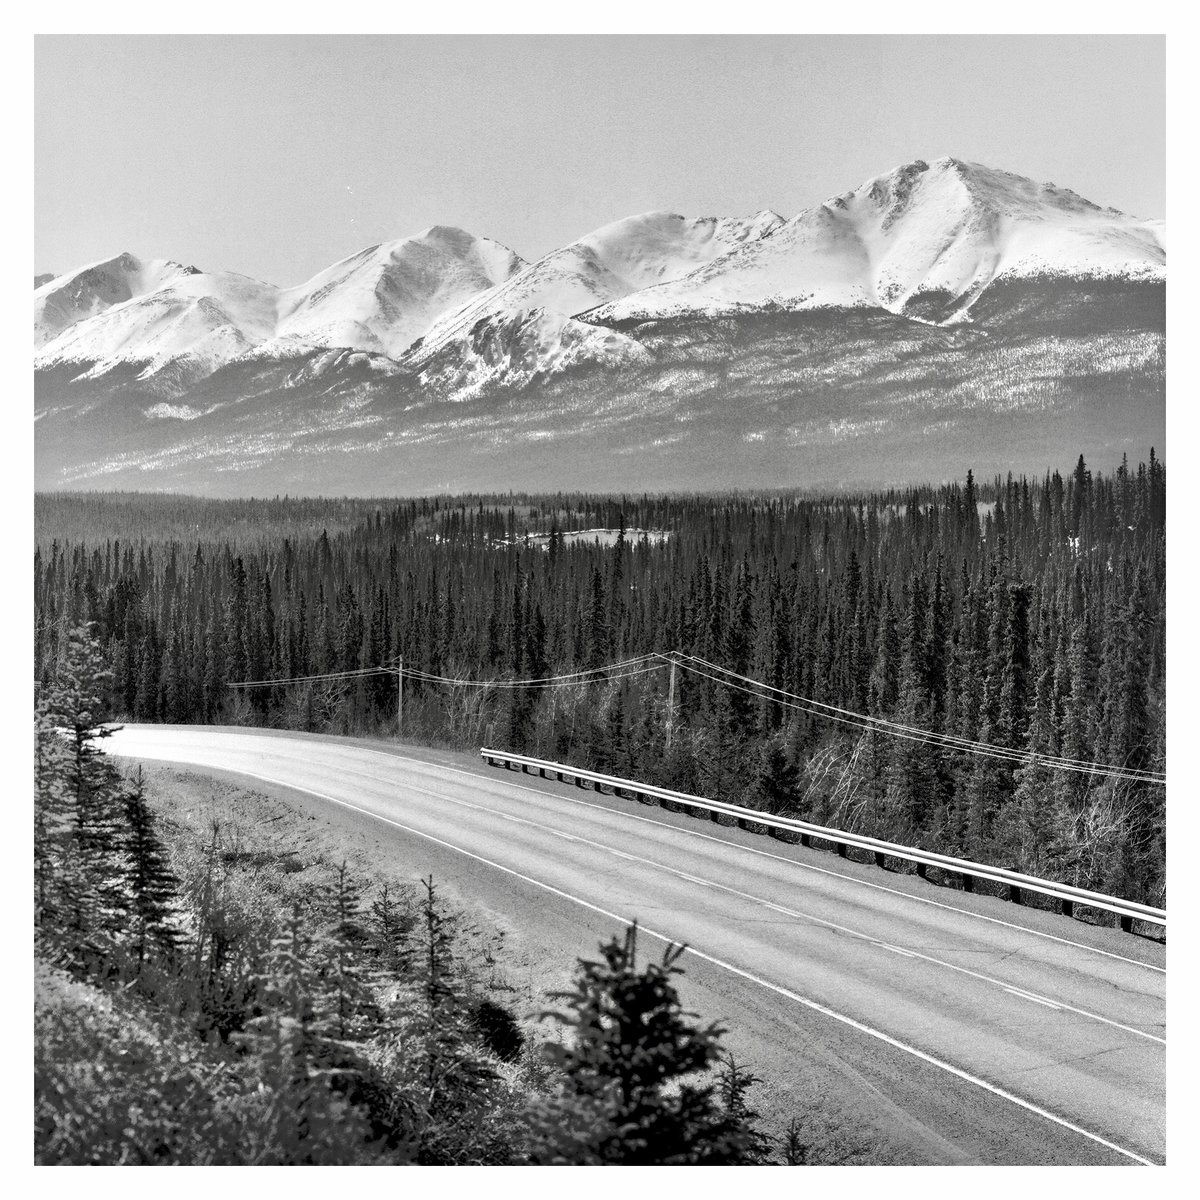 South Klondike Hwy

Hasselblad 500CM
Zeiss Planar 150mm f4
Ilford Delta 400
The Yukon
#believeinfilm
#filmphotography